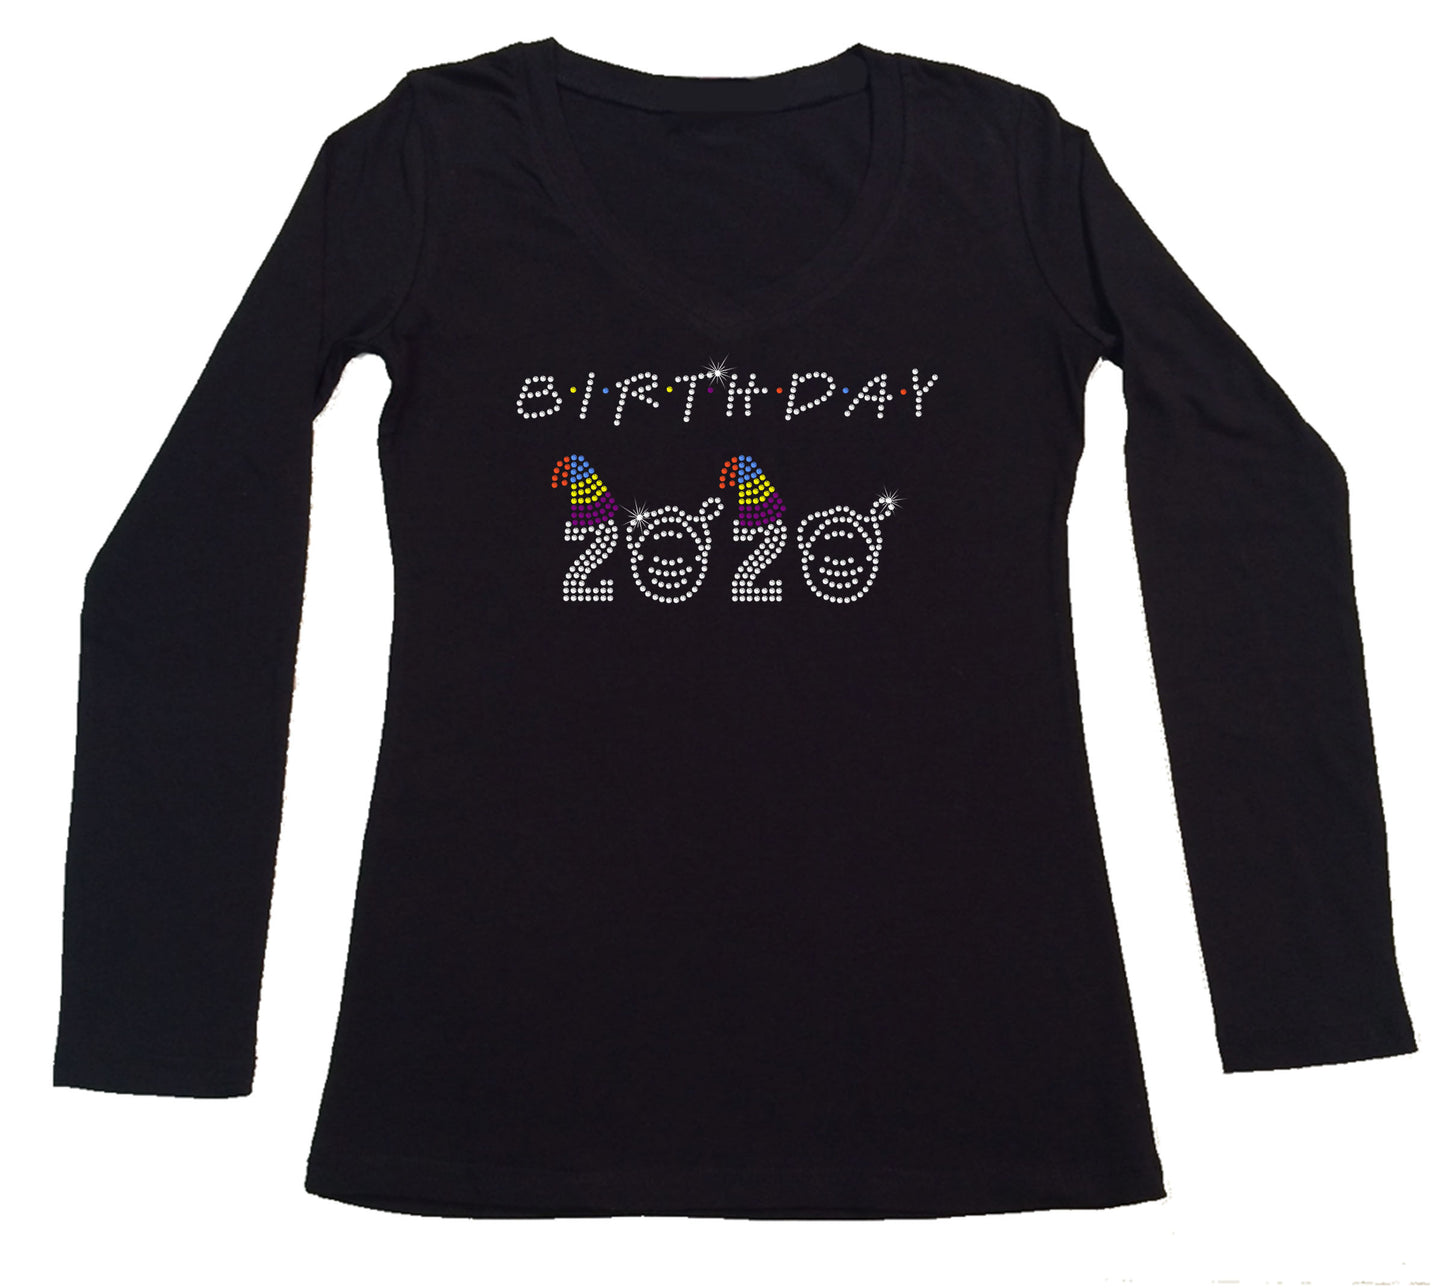 Womens T-shirt with Birthday 2020 Friends Style in Rhinestones